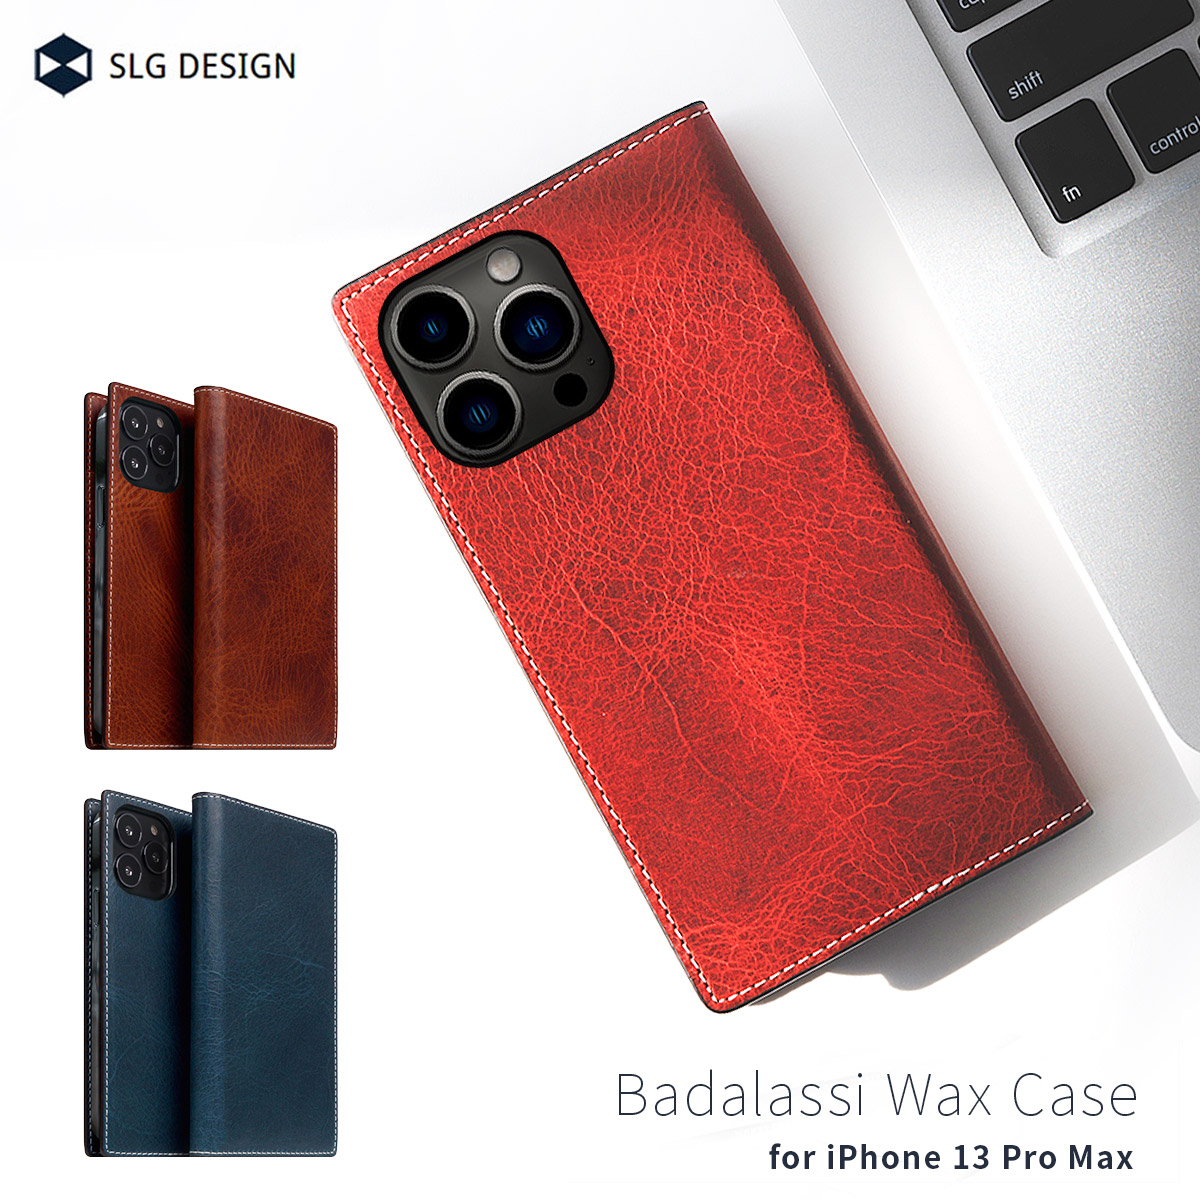 【iPhone 13 Pro Max】Badalassi Wax case